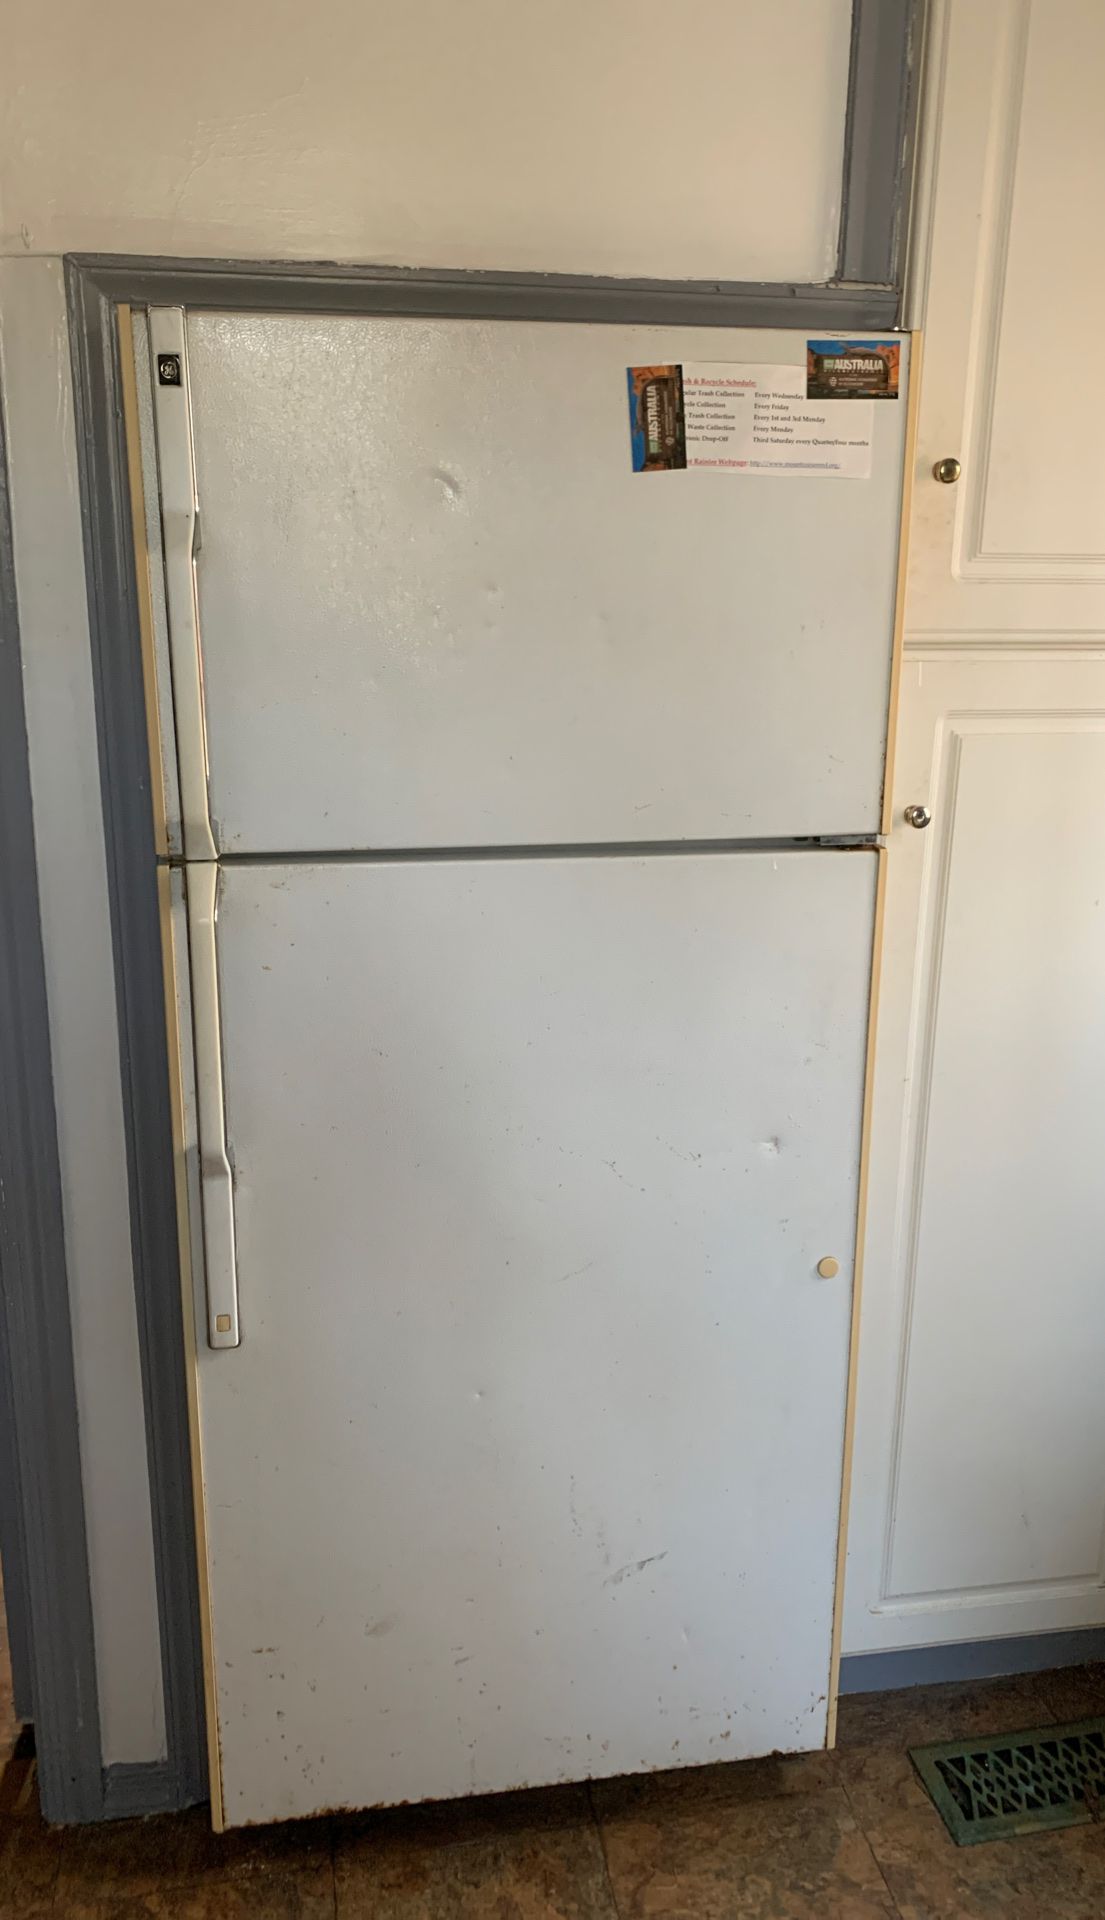 GE refrigerator, free for pickup. Both freezer and fridge portions work.